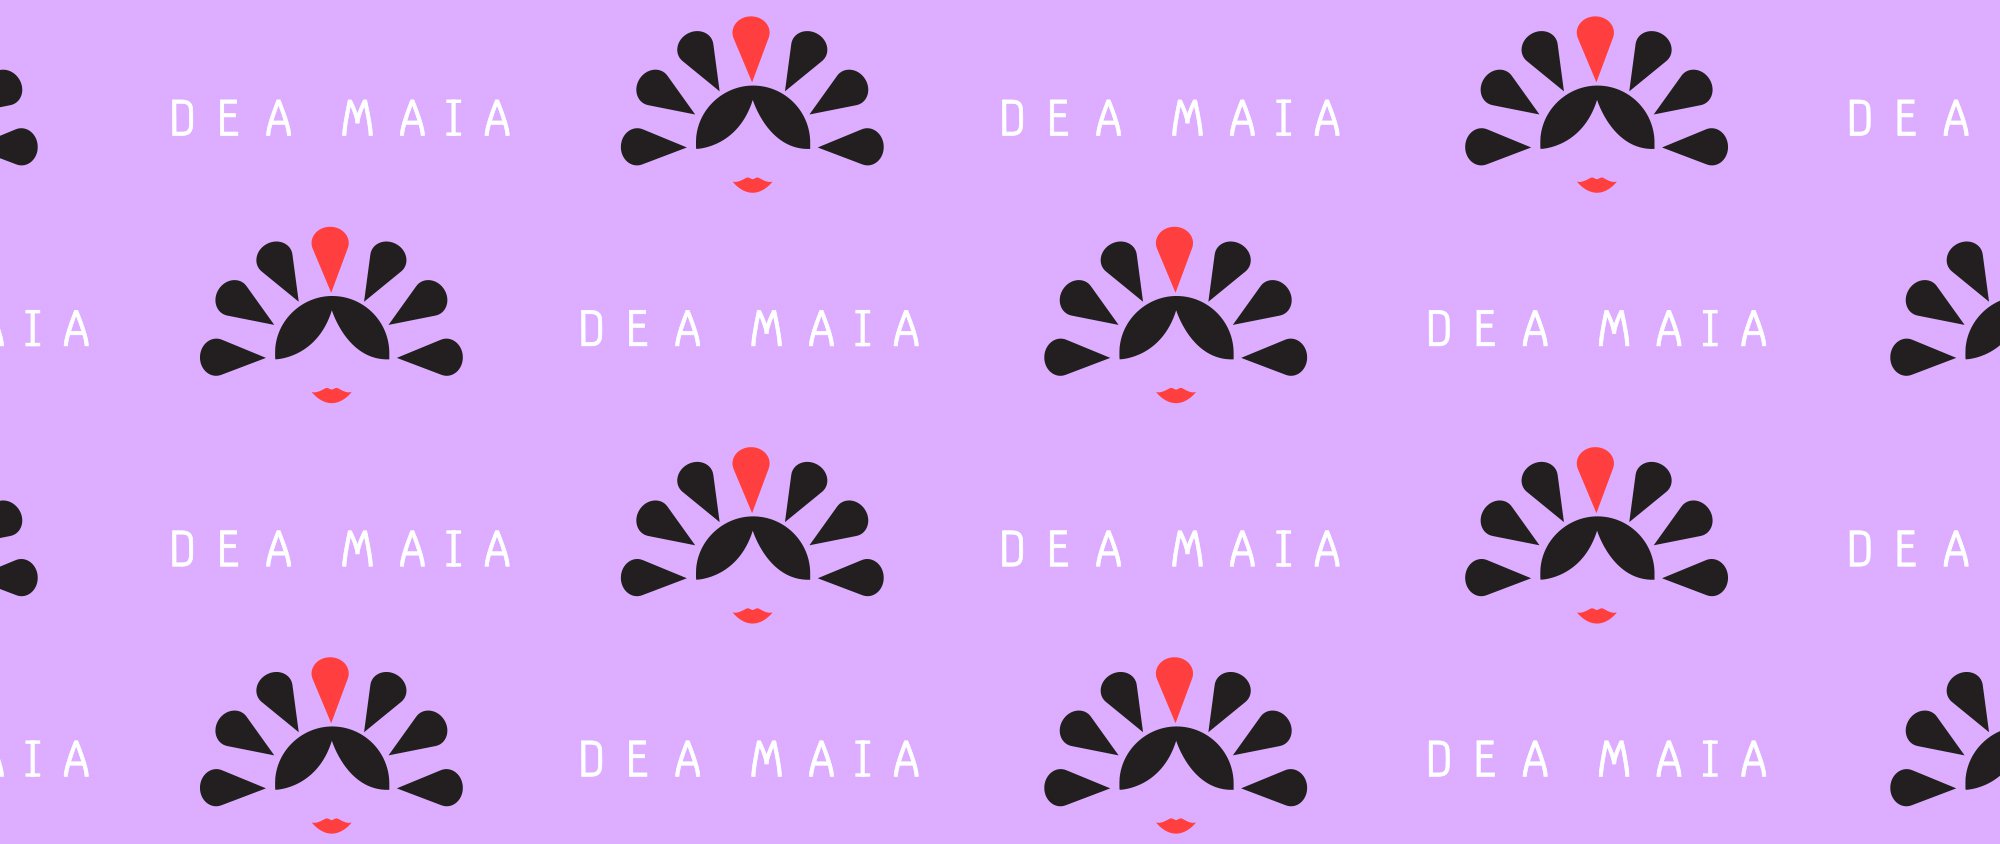 Dea Maia branding pattern by Jacober Creative